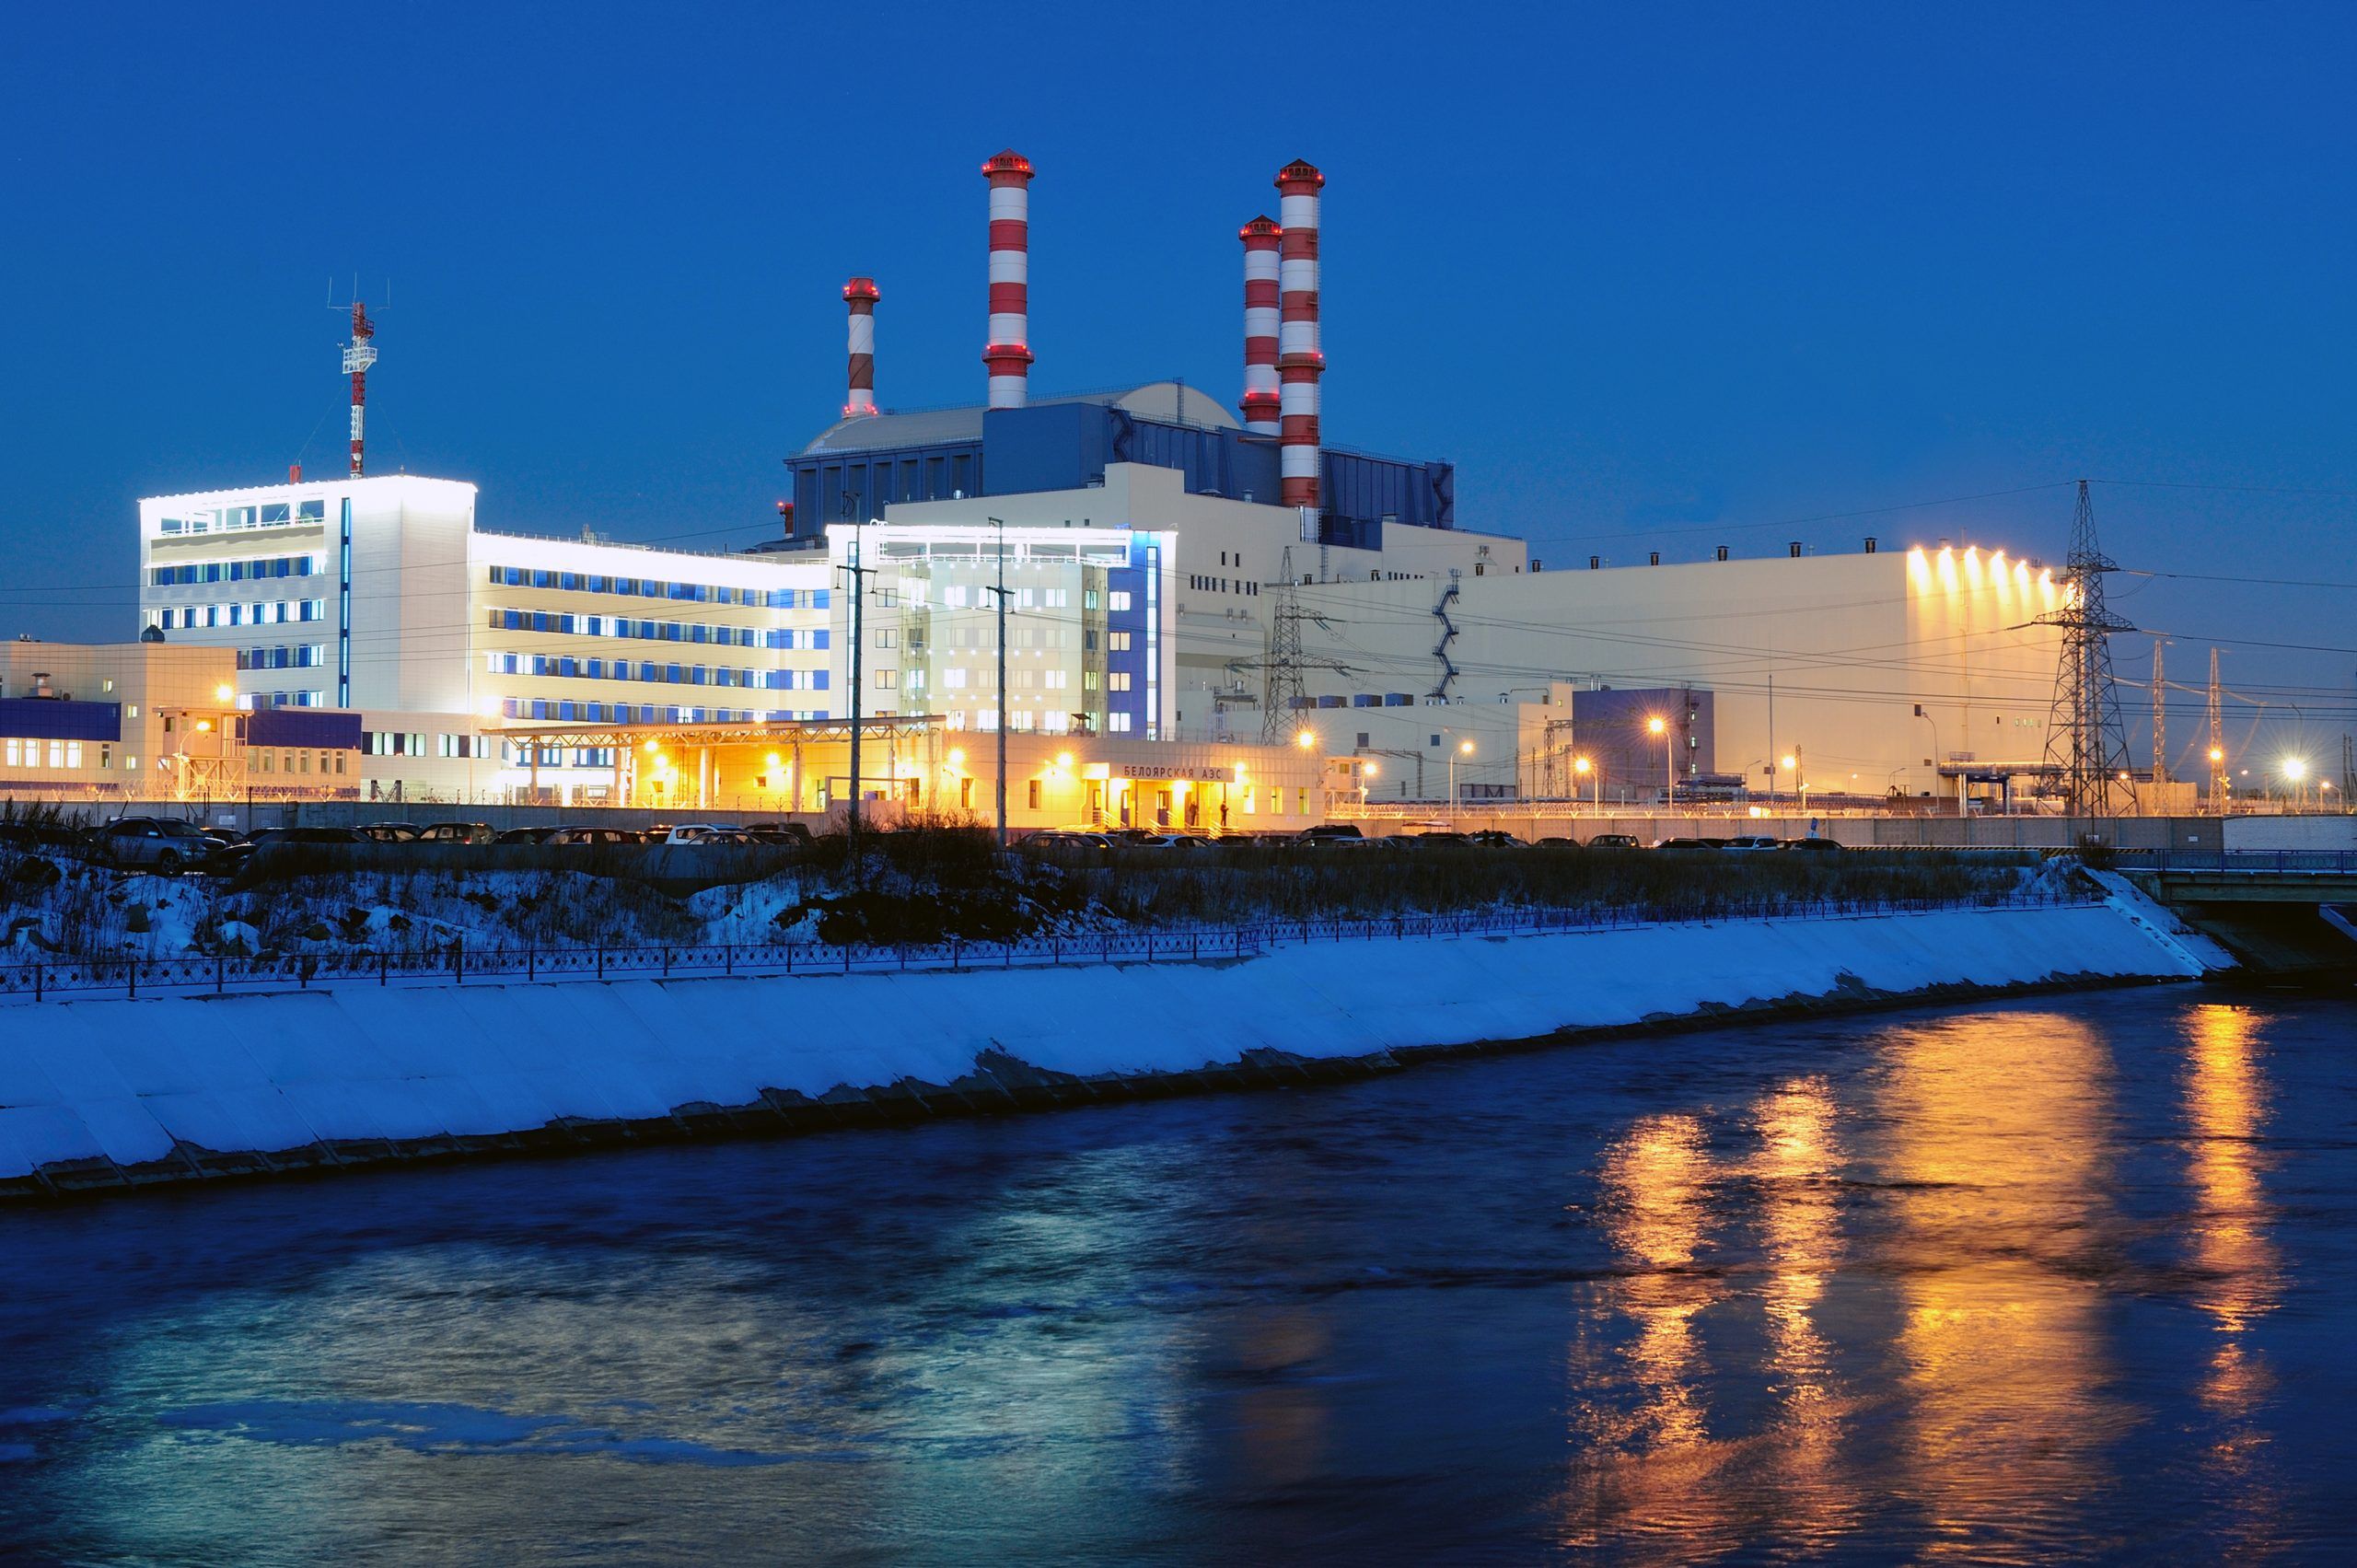 Реакторы аэс россии. БАЭС Белоярская атомная станция. Белоярская АЭС энергоблок БН-800. 4 Энергоблок Белоярской АЭС. 4 Блок Белоярской АЭС.